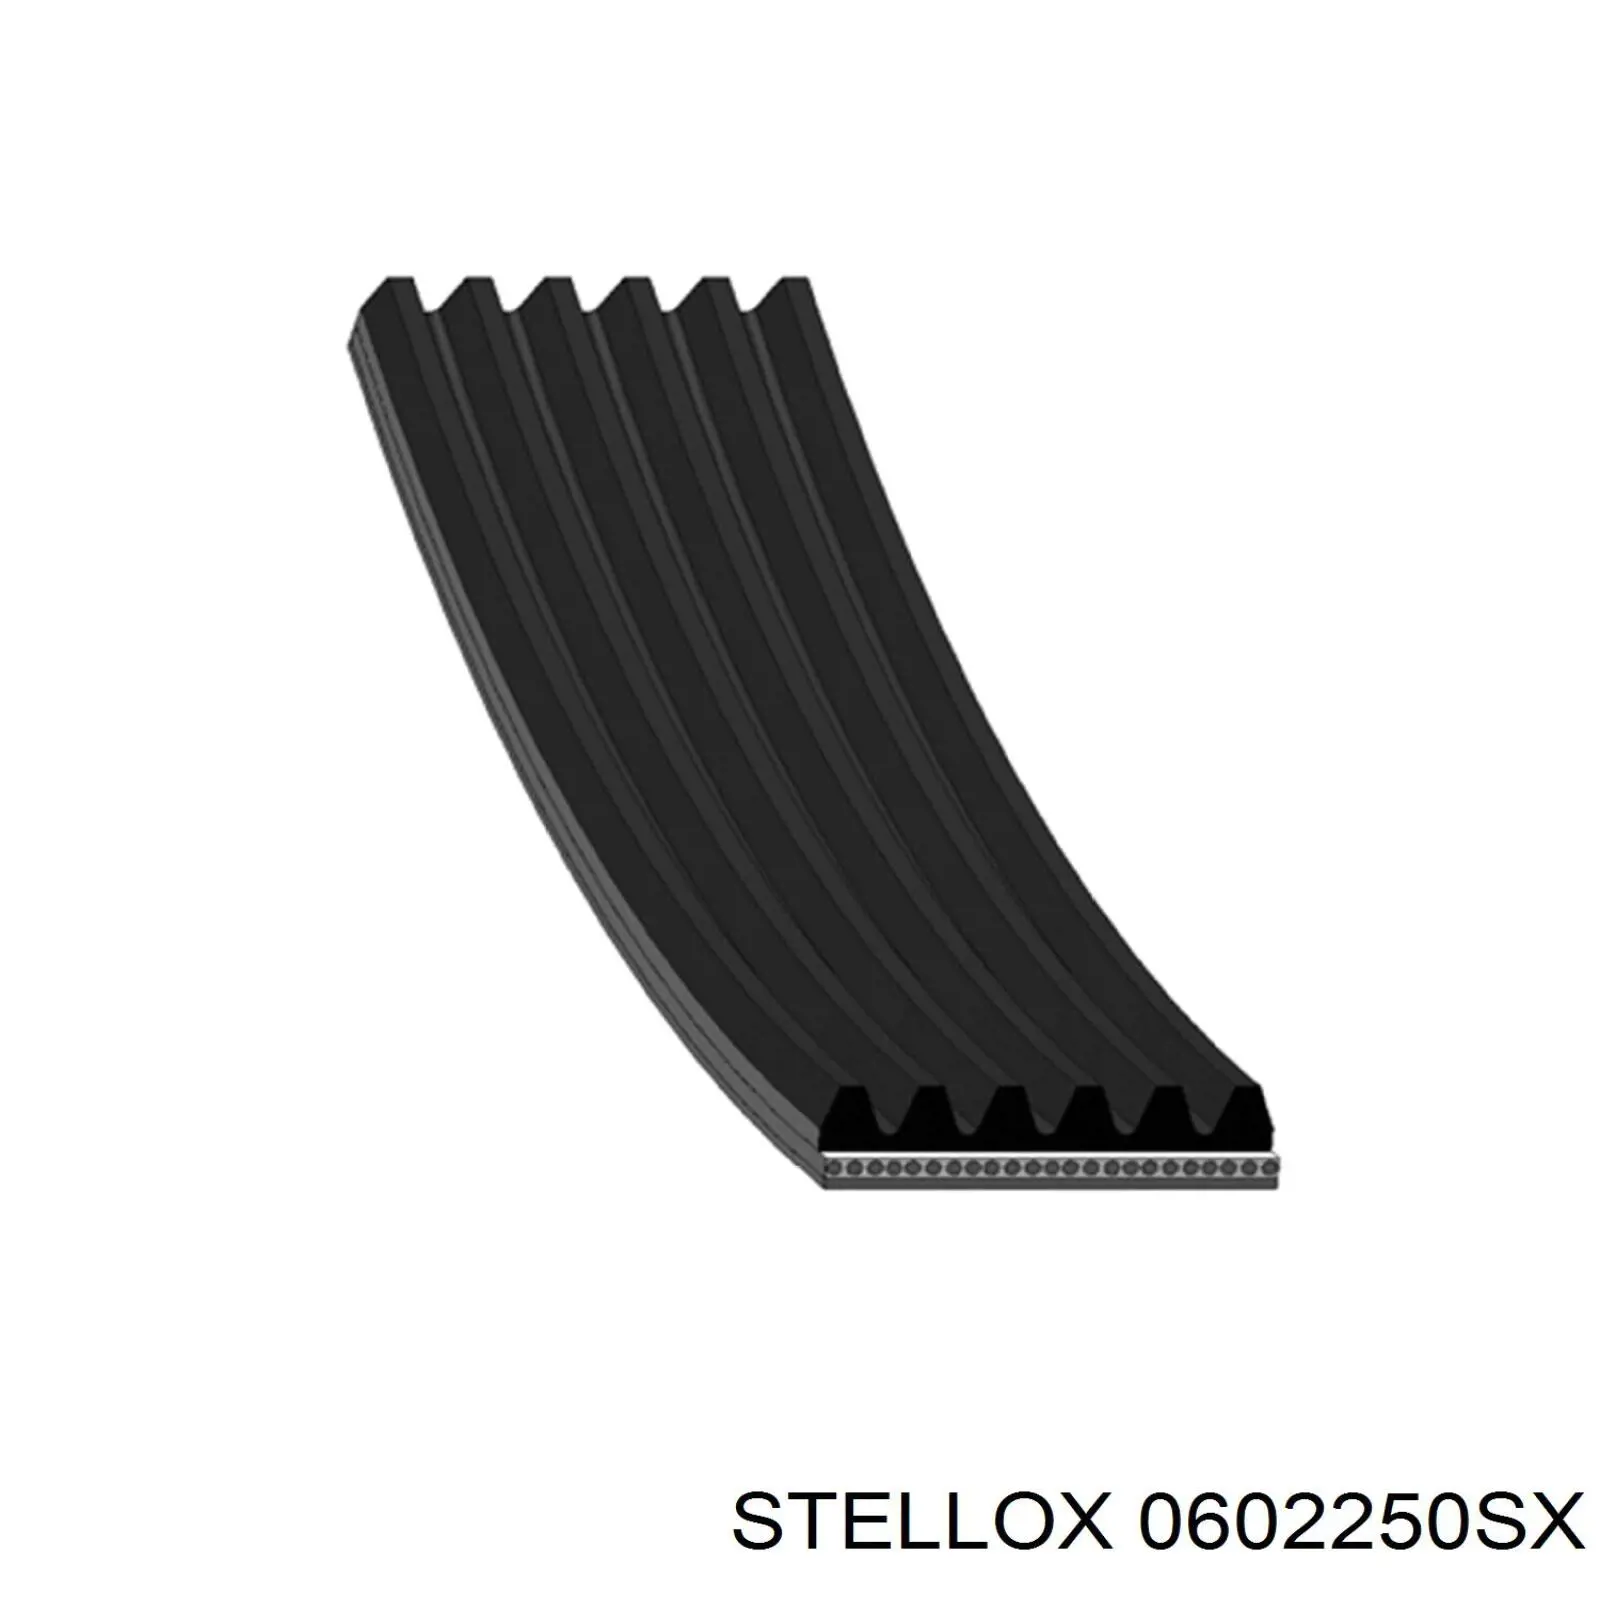 06-02250-SX Stellox correa trapezoidal